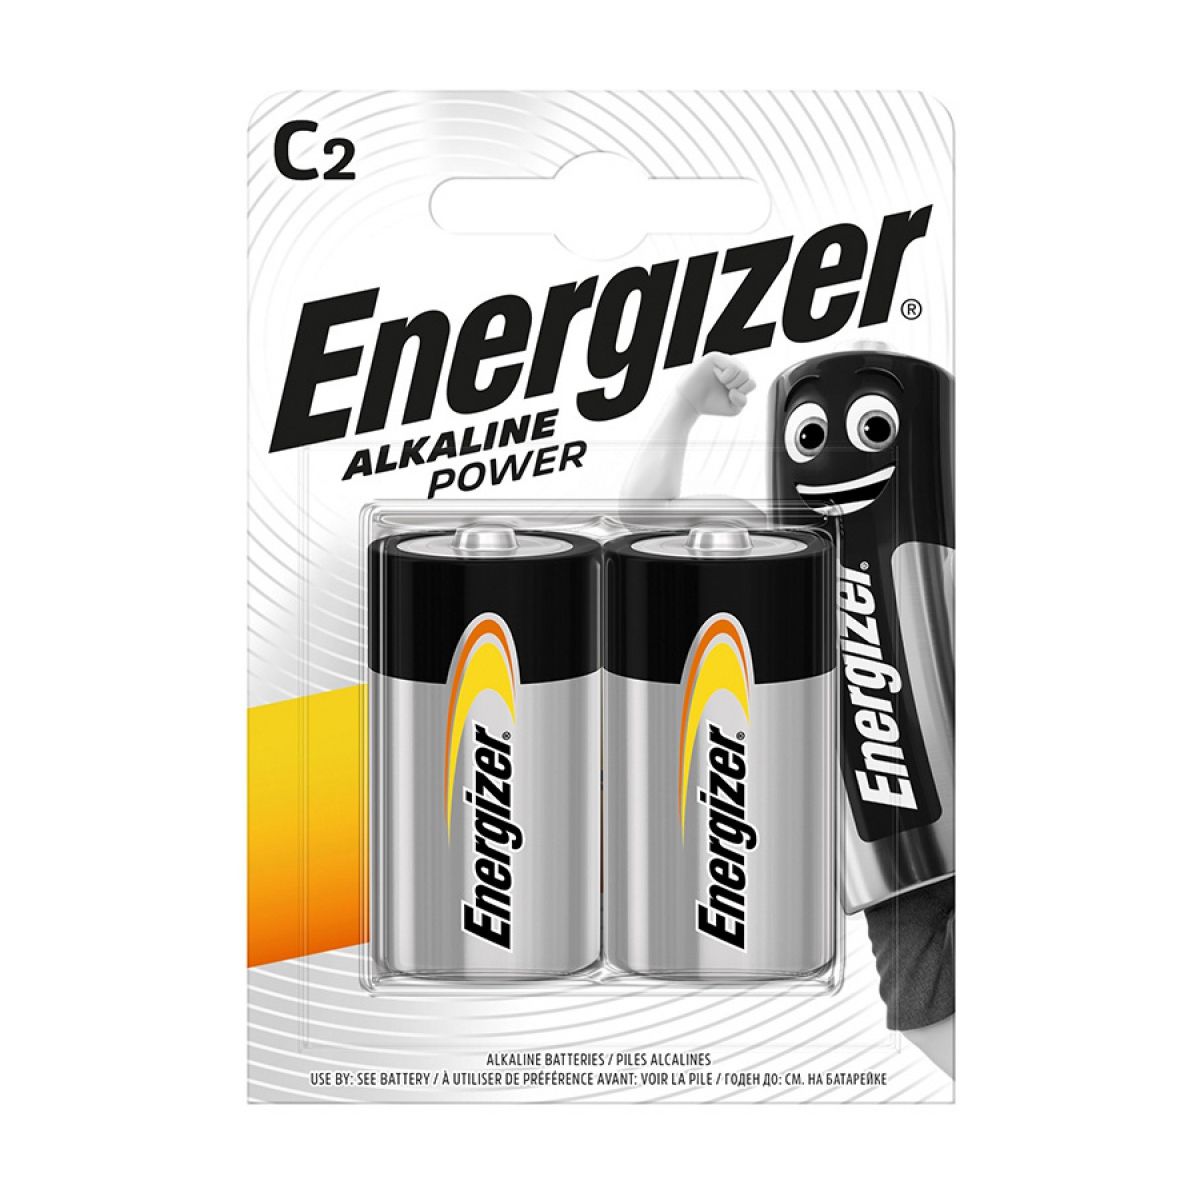 Baterie Energizer Alkaline Power C LR14 LR14 (EN-297324)